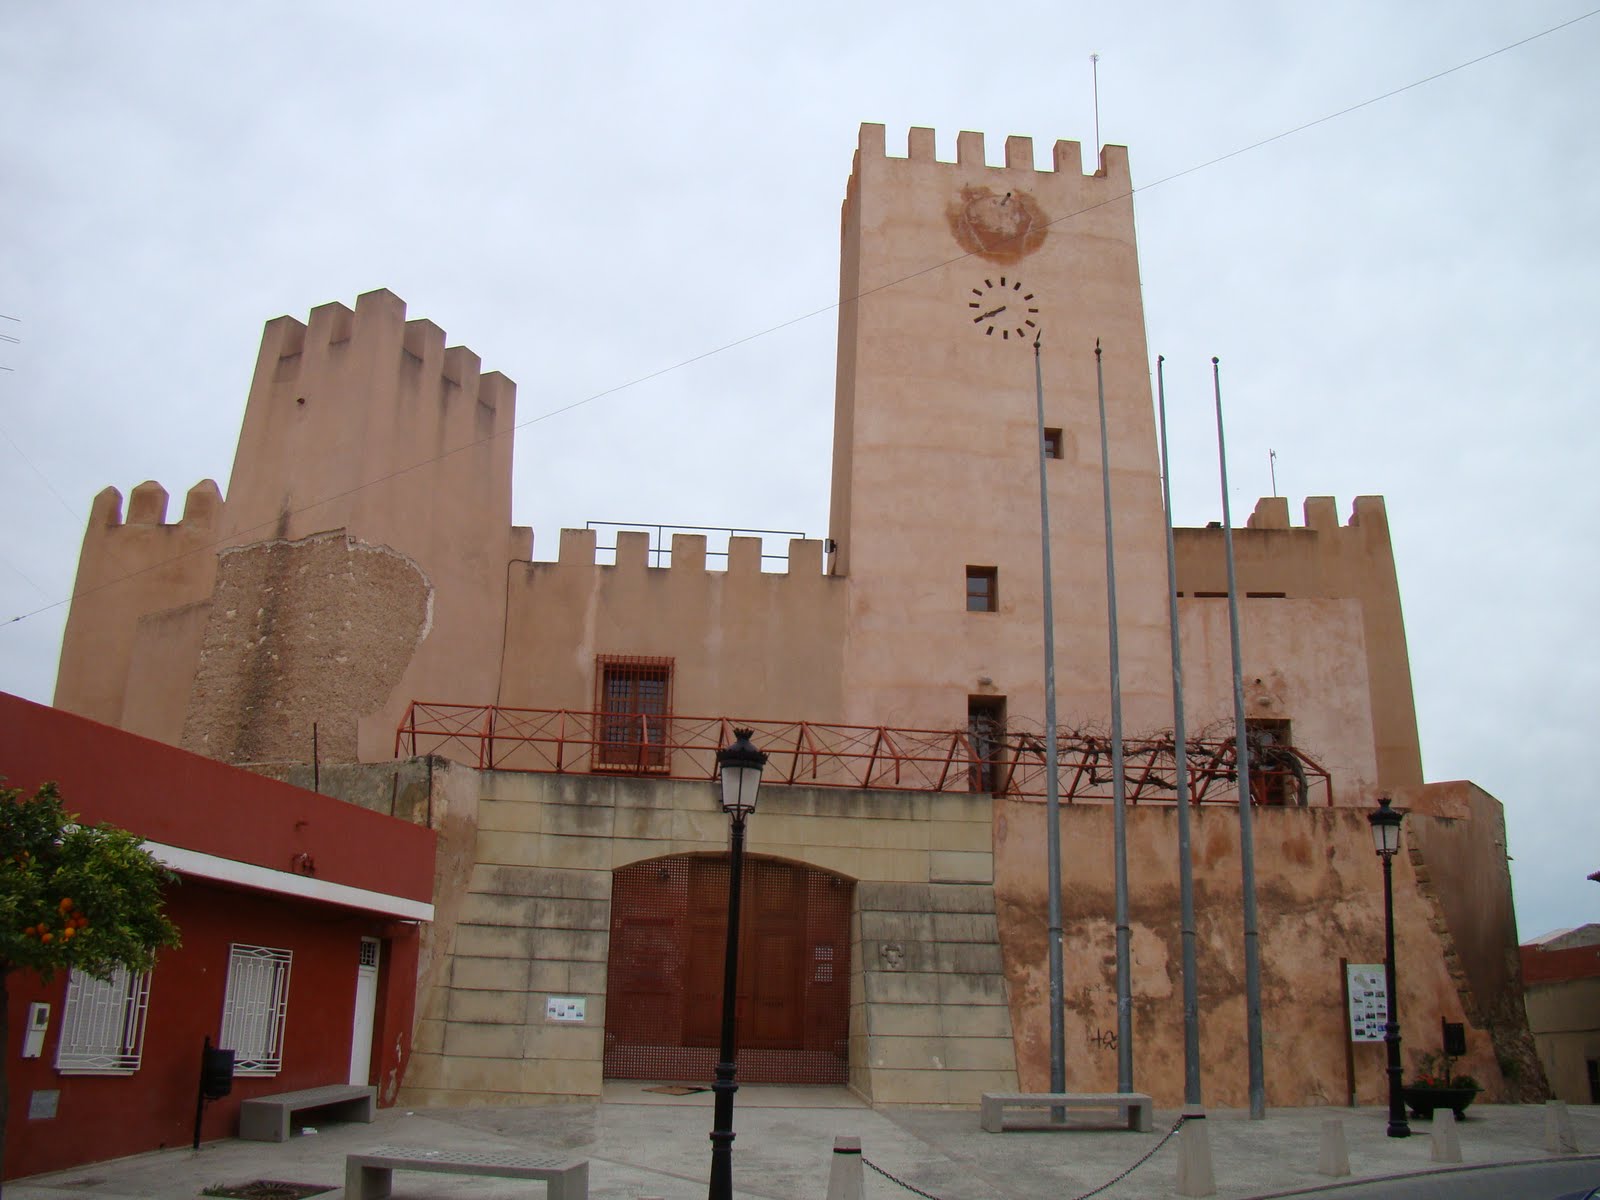 Castillos Españoles: CASTILLO DE BÉTERA - VALENCIA